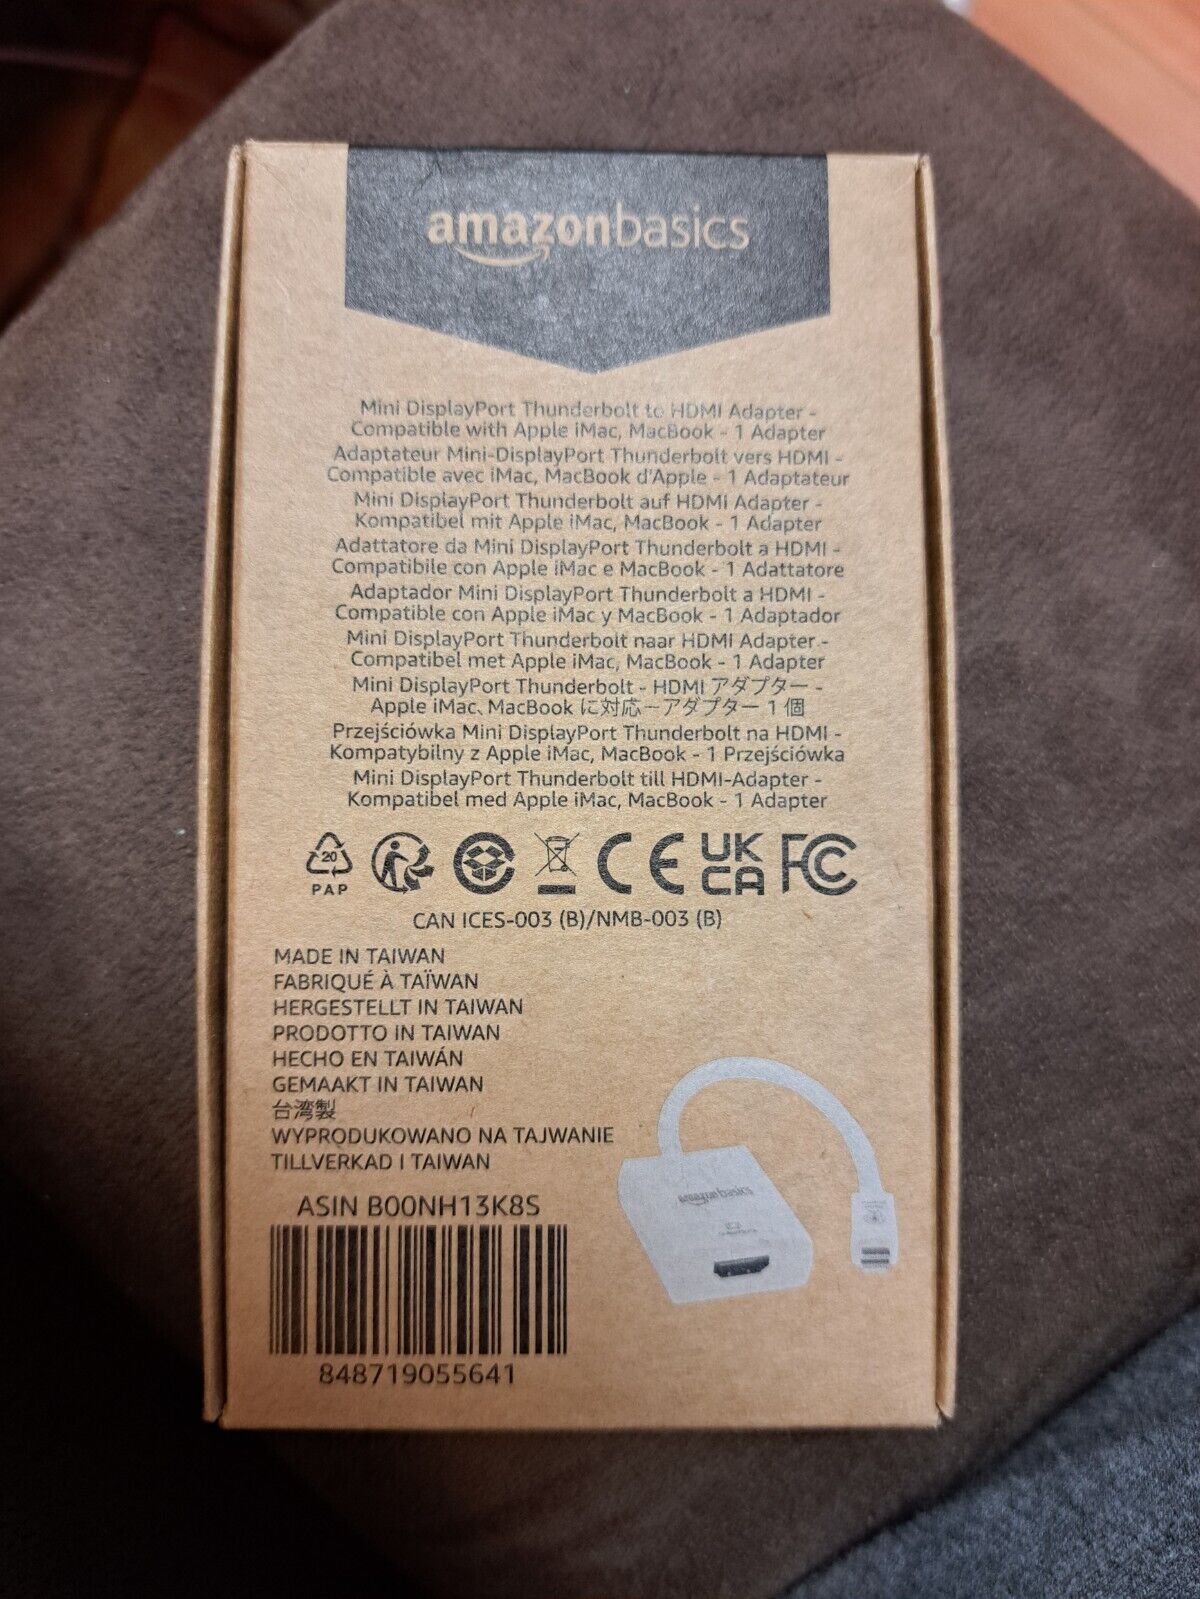 Amazon Basics Mini DisplayPort Thunderbolt to HDMI Adapter for Apple iMac